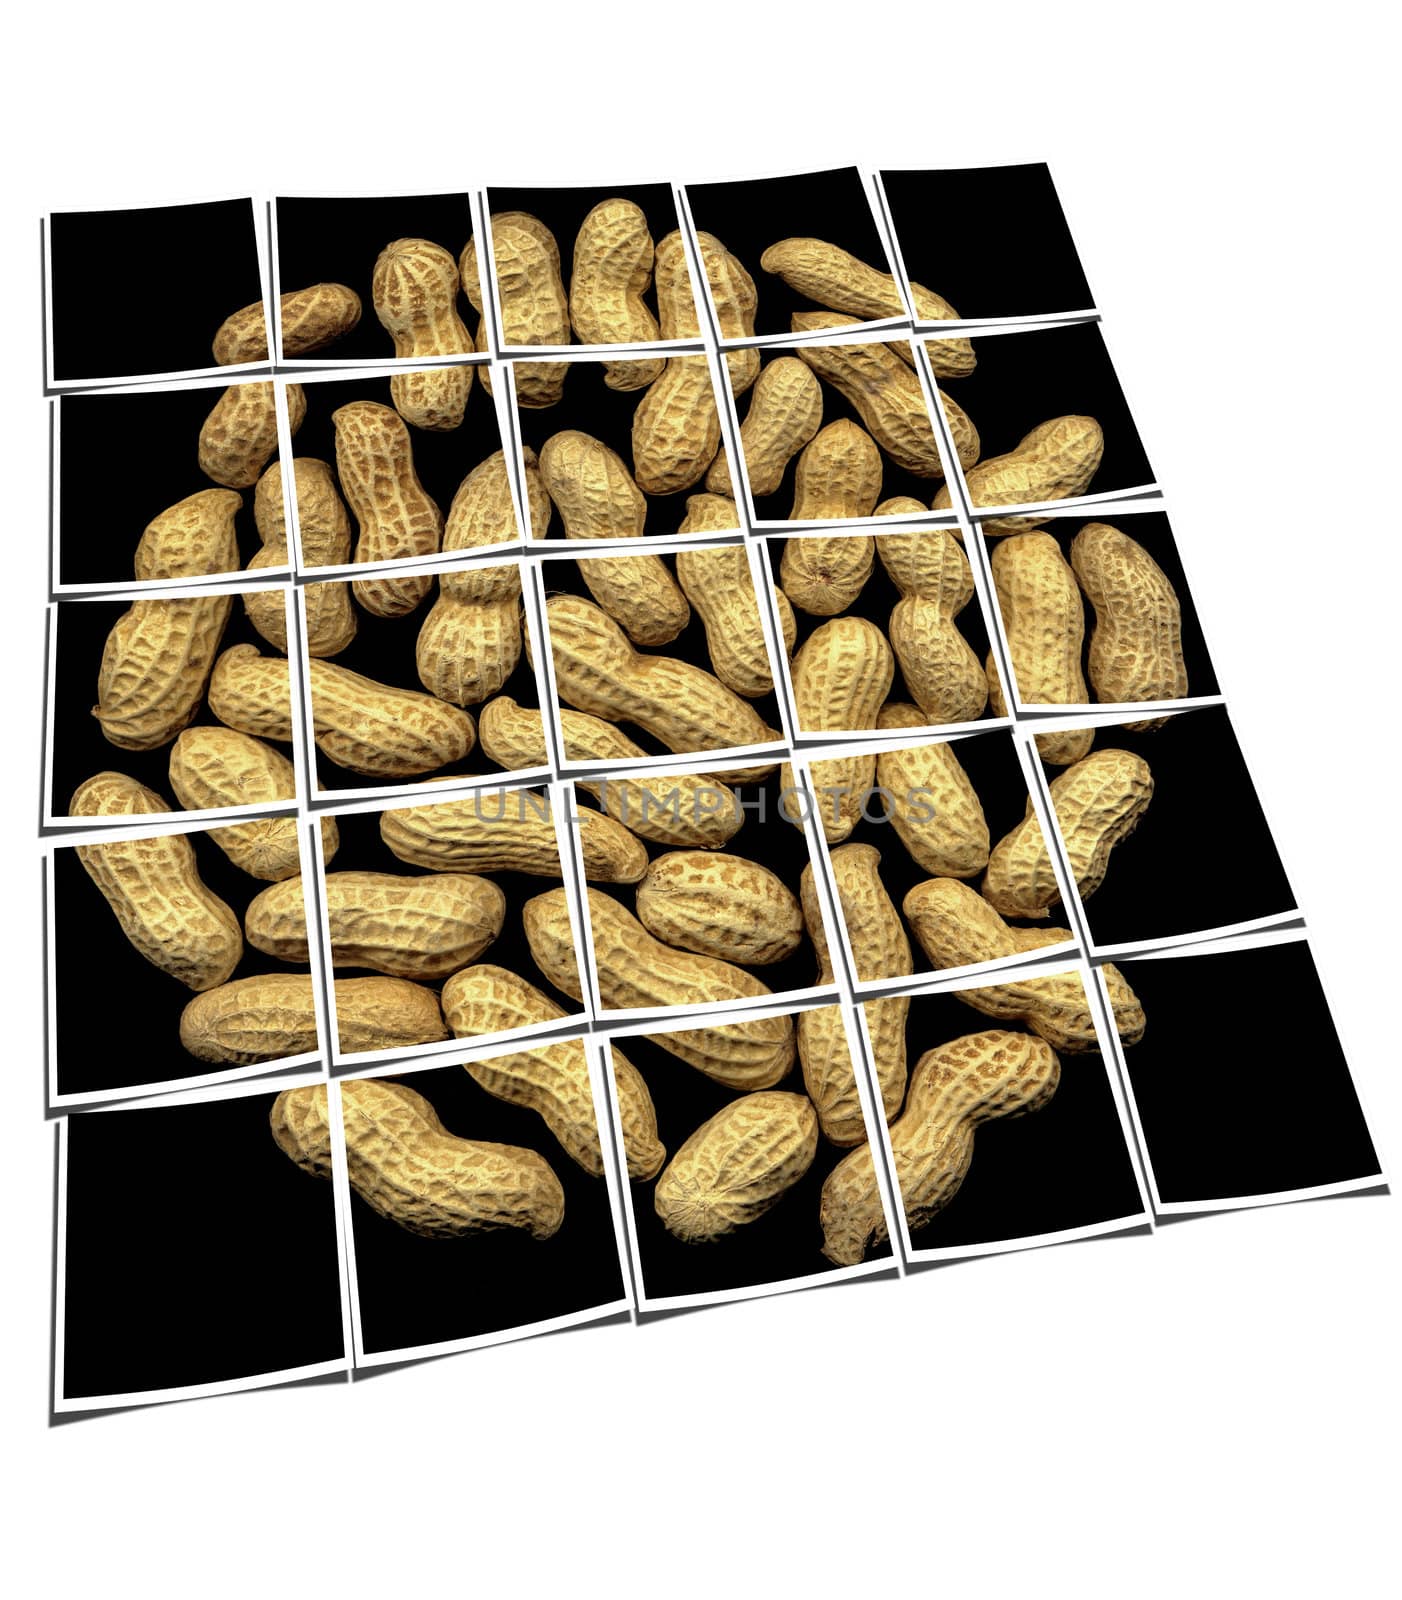 peanuts collage by keko64